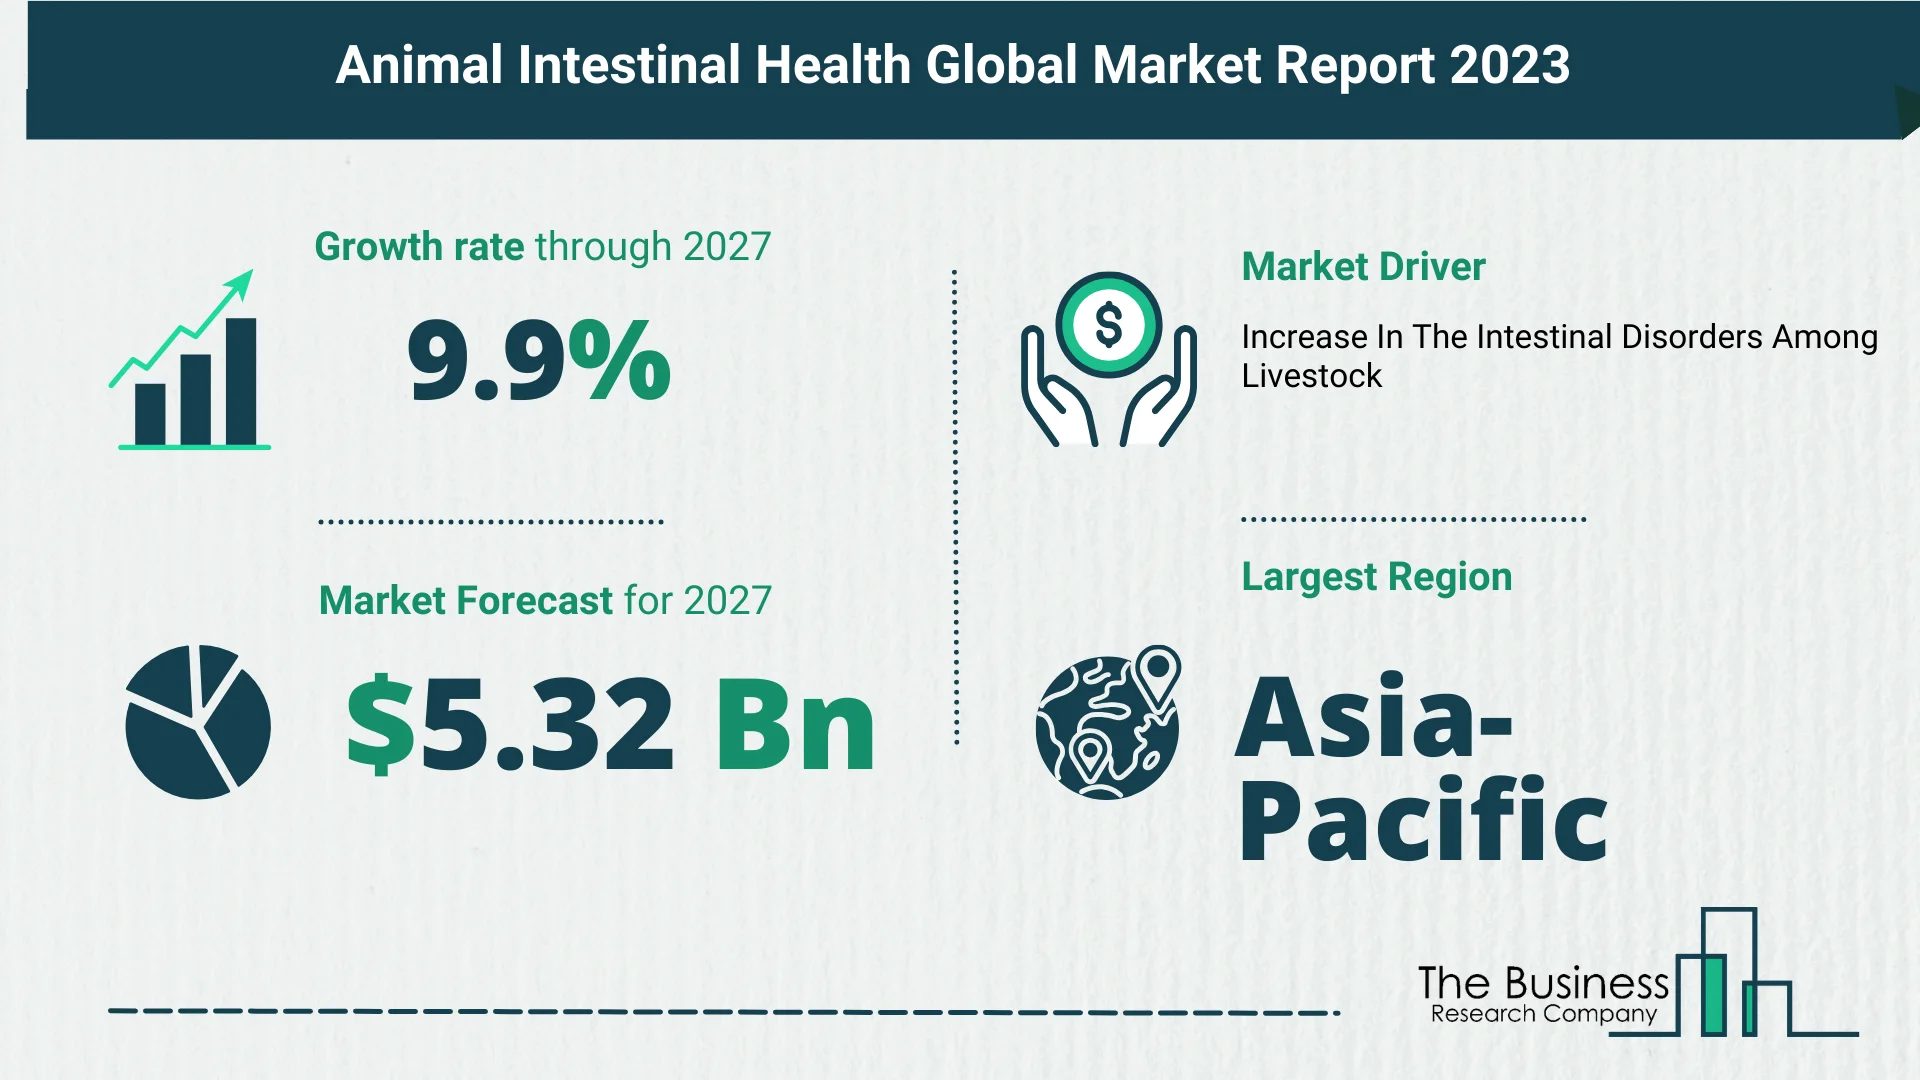 Global Animal Intestinal Health Market Size